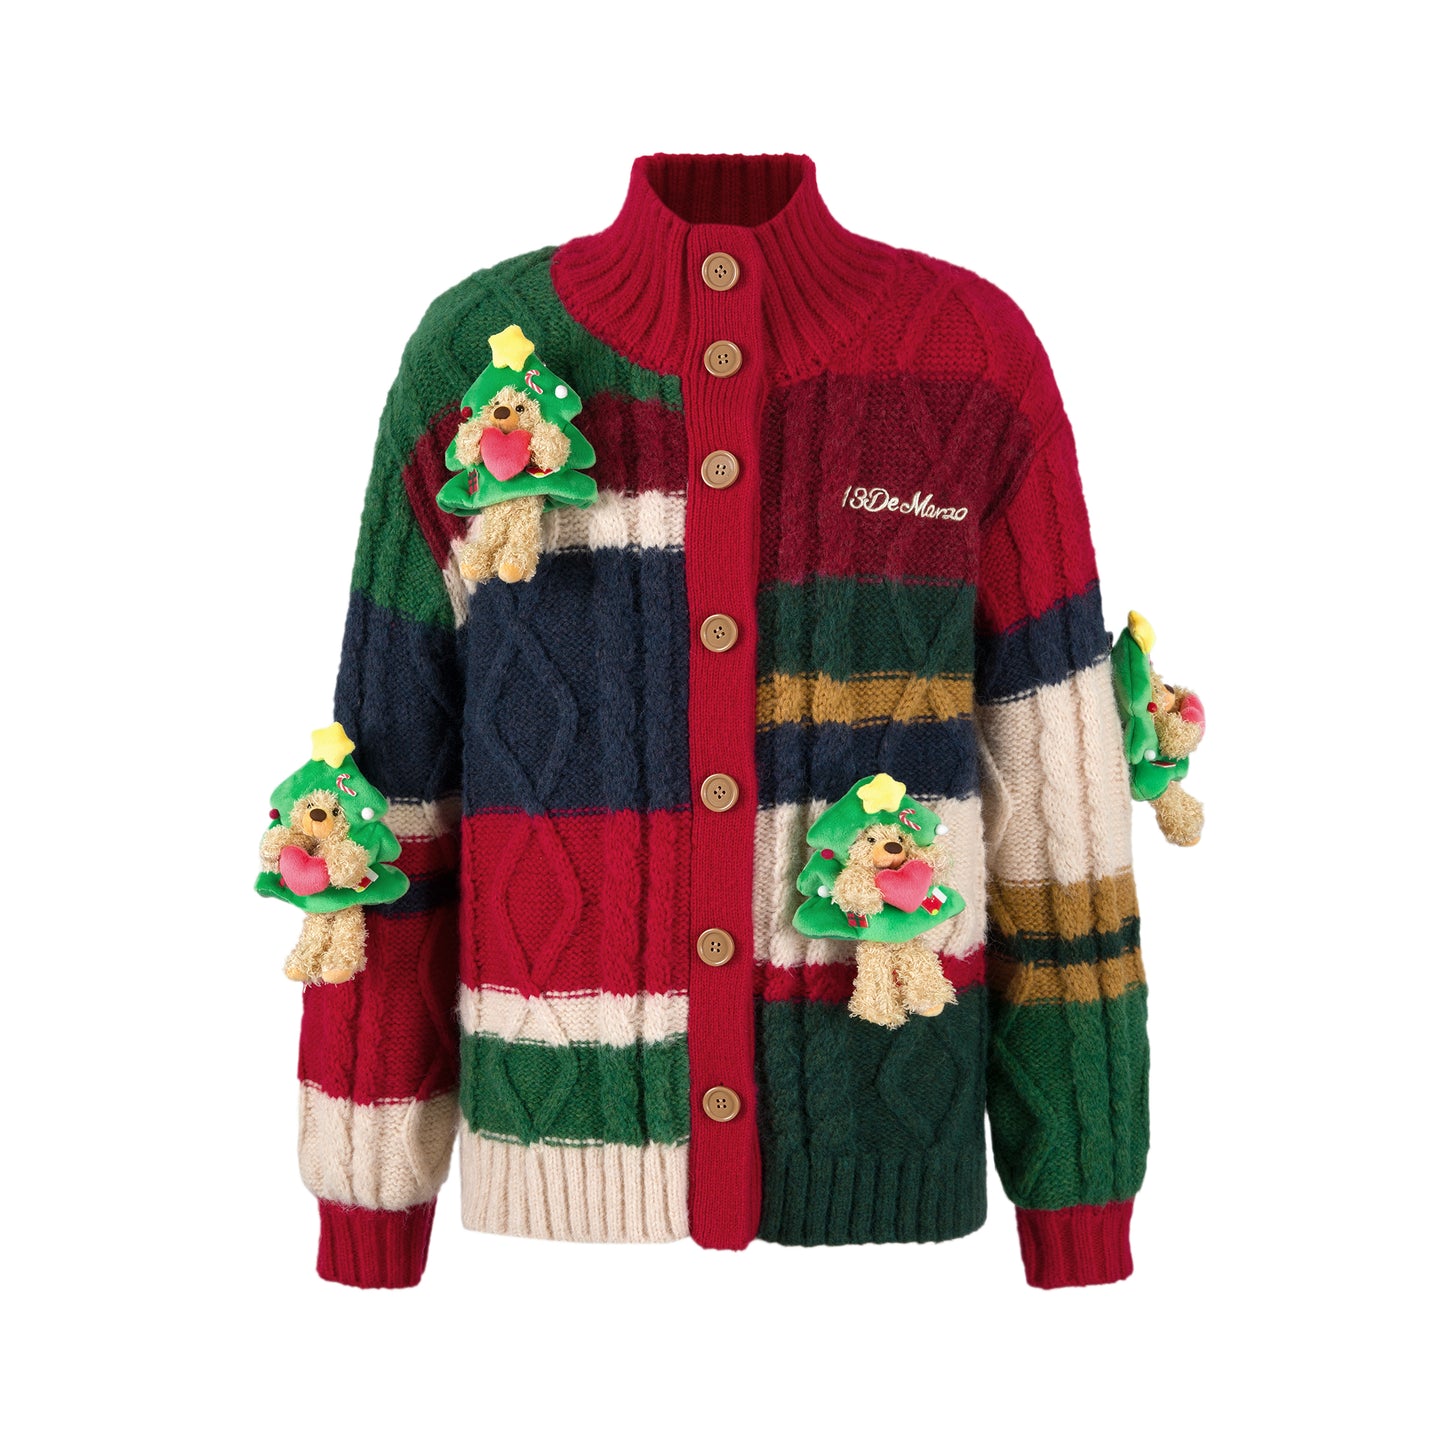 13DE MARZO Christmas Lumi Heart Bear Sweater